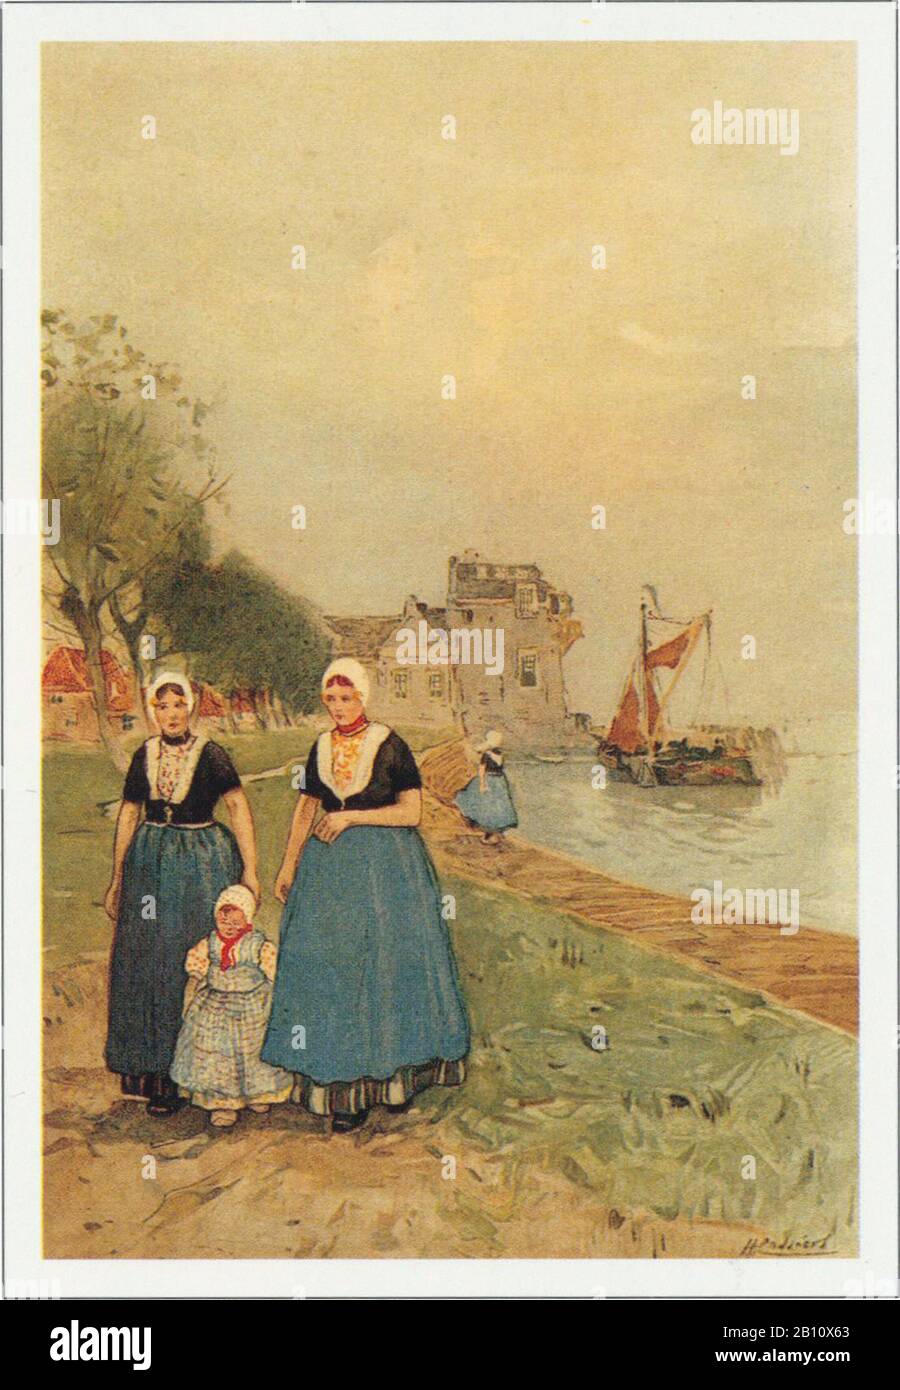 Zeeland a - Ilustración de Henri Caux (1858 - 1944) Foto de stock